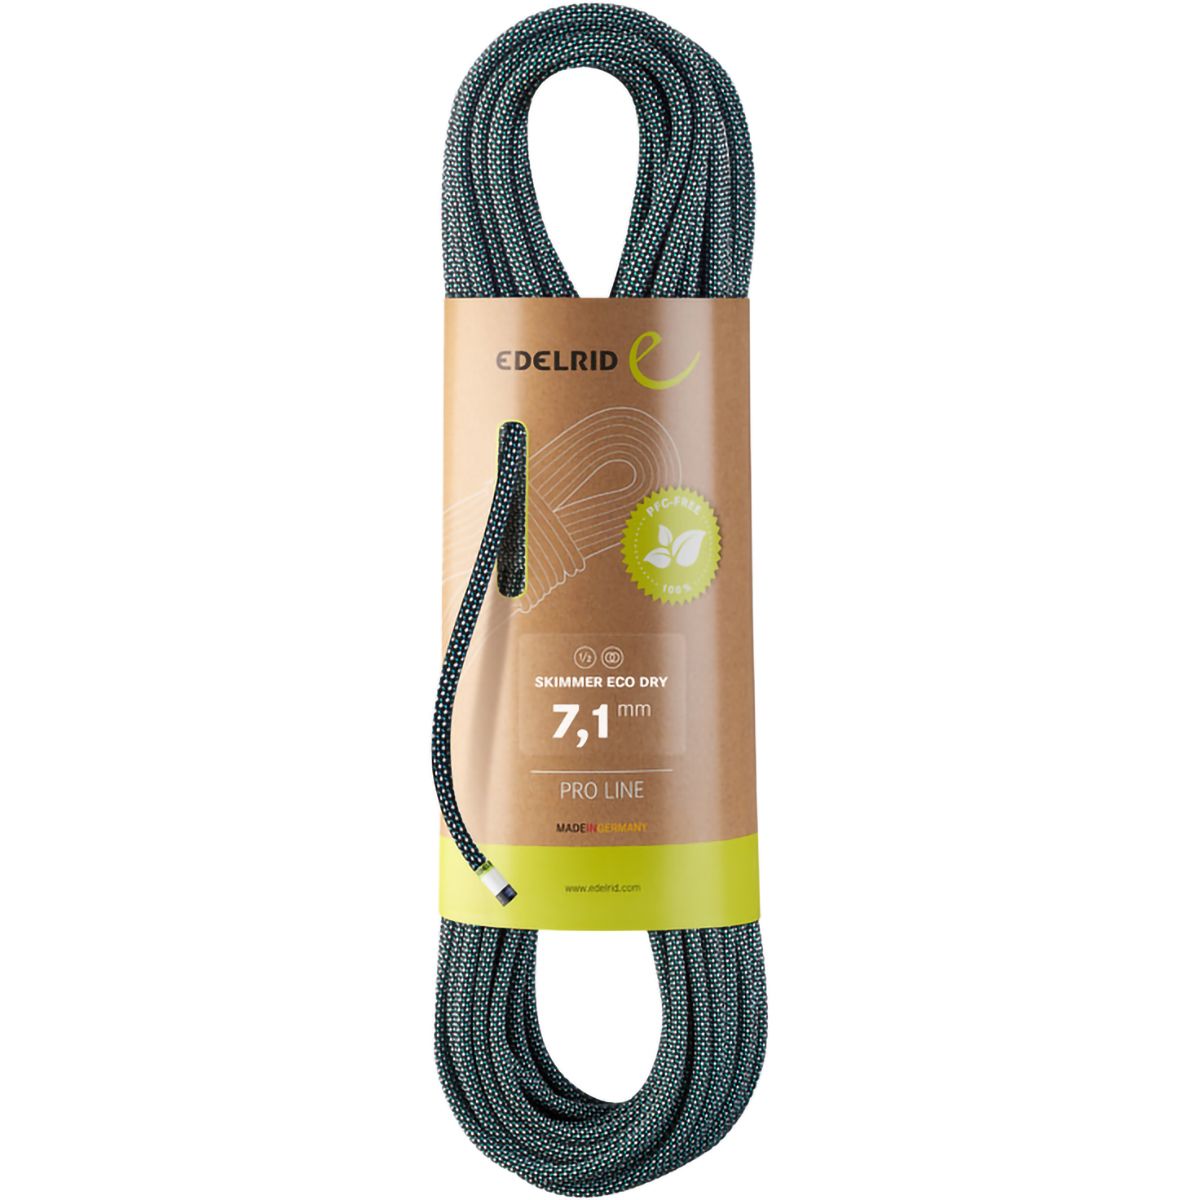 Edelrid Skimmer Eco 7.1mm Dry Rope